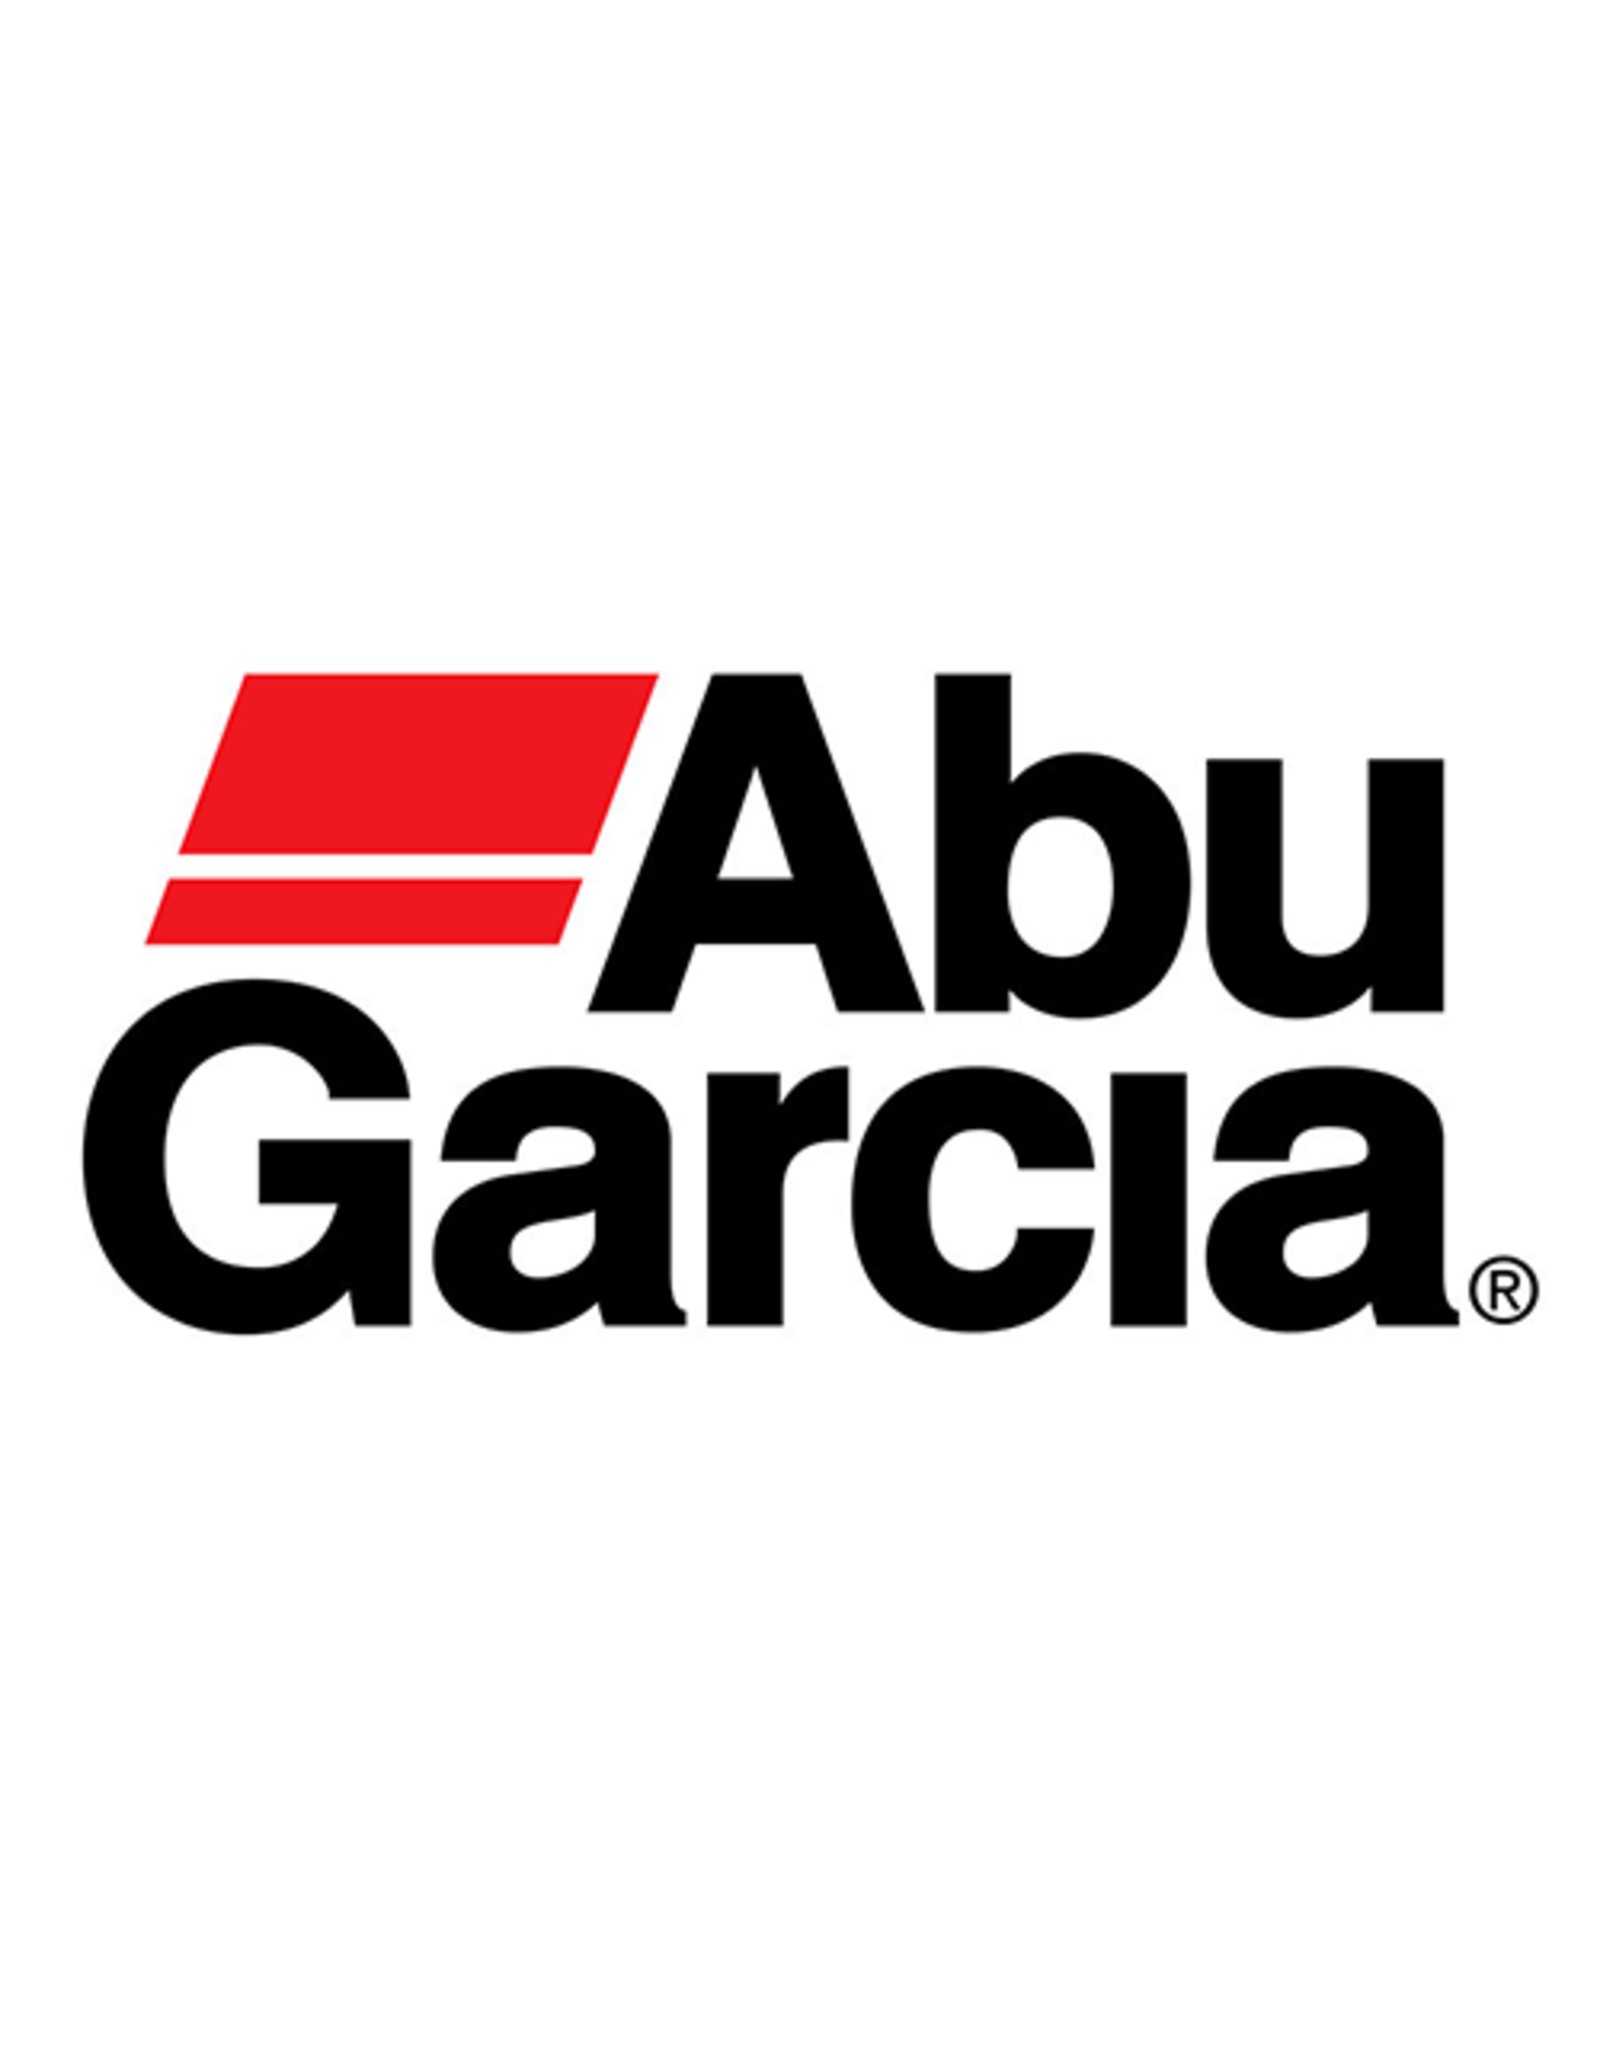 Abu Garcia 1216531  BALL BEARING